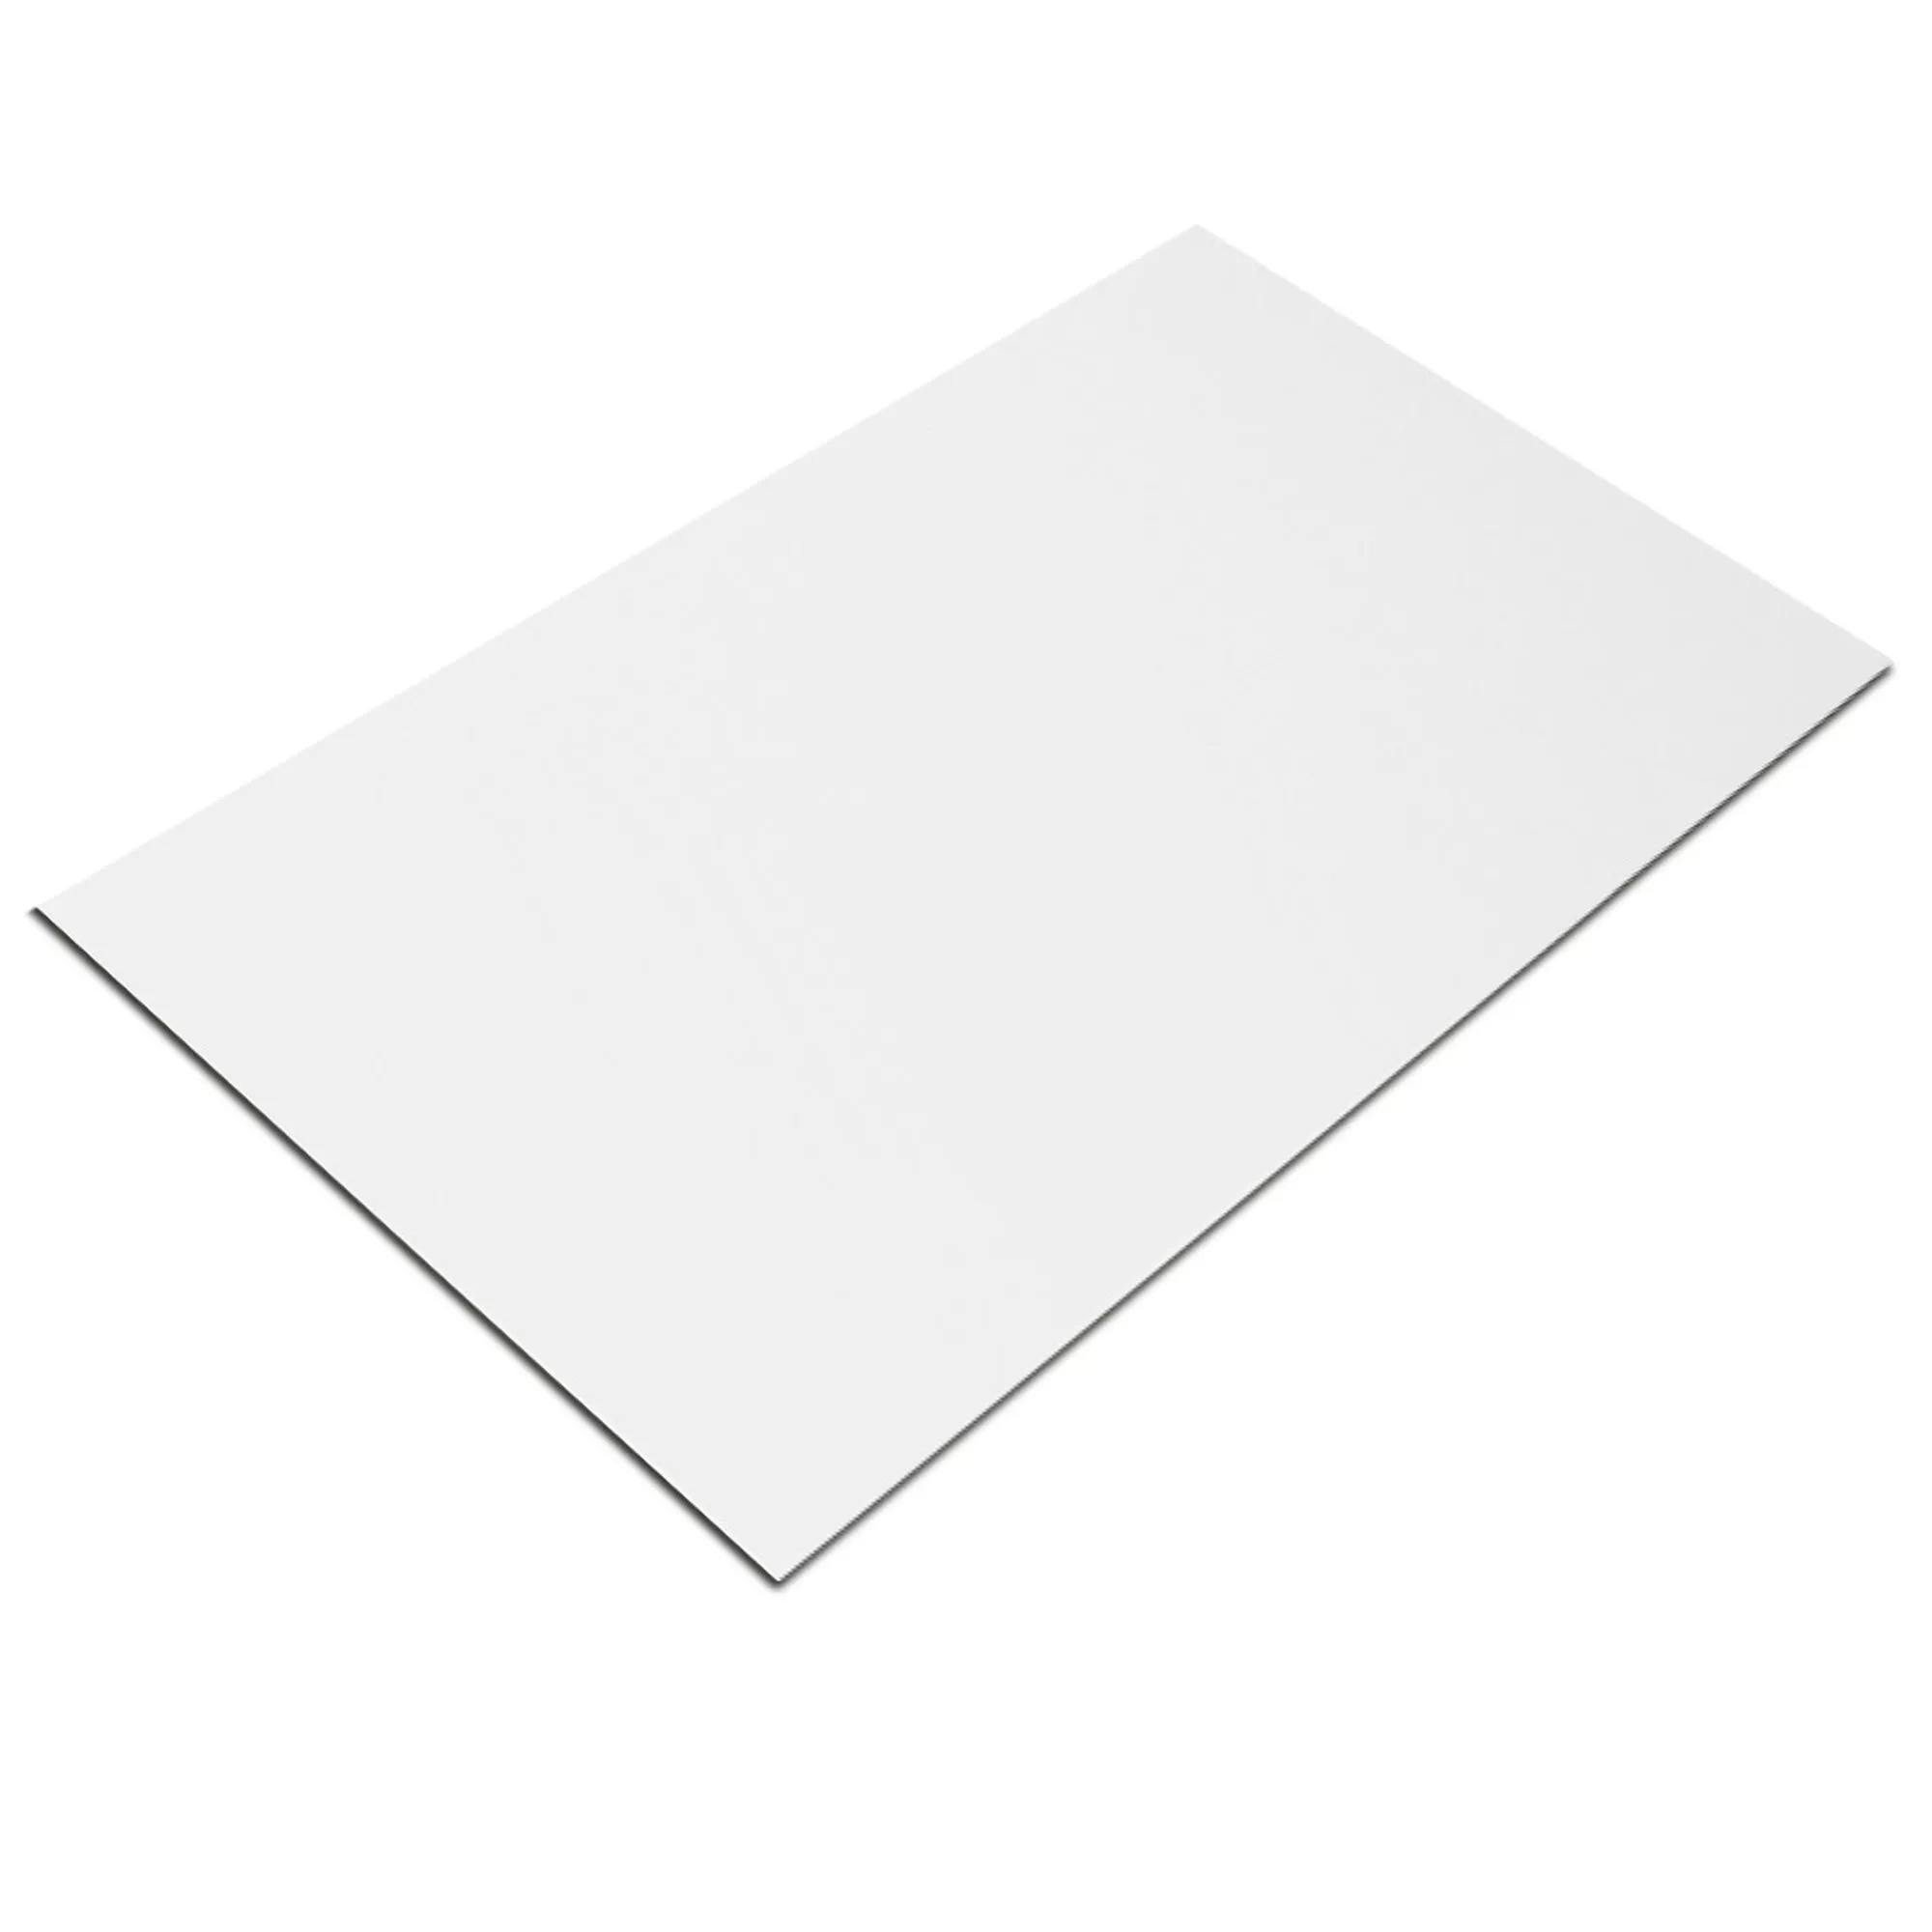 Sample Wall Tiles Fenway White Mat 20x50cm